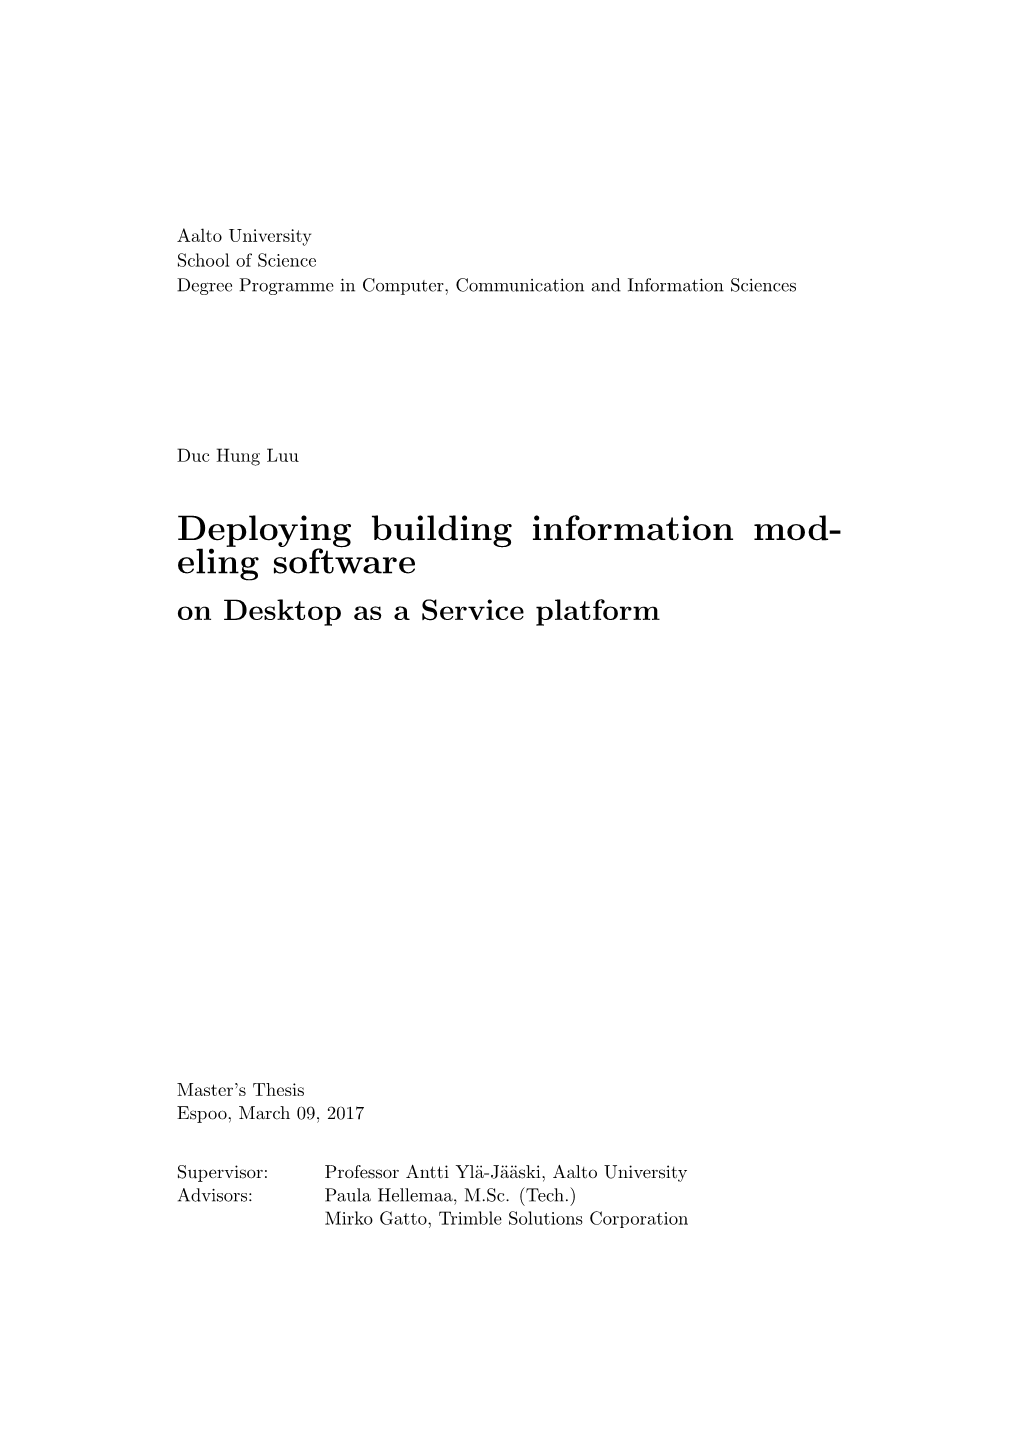 Deploying Building Information Modeling Software on Desktop As A